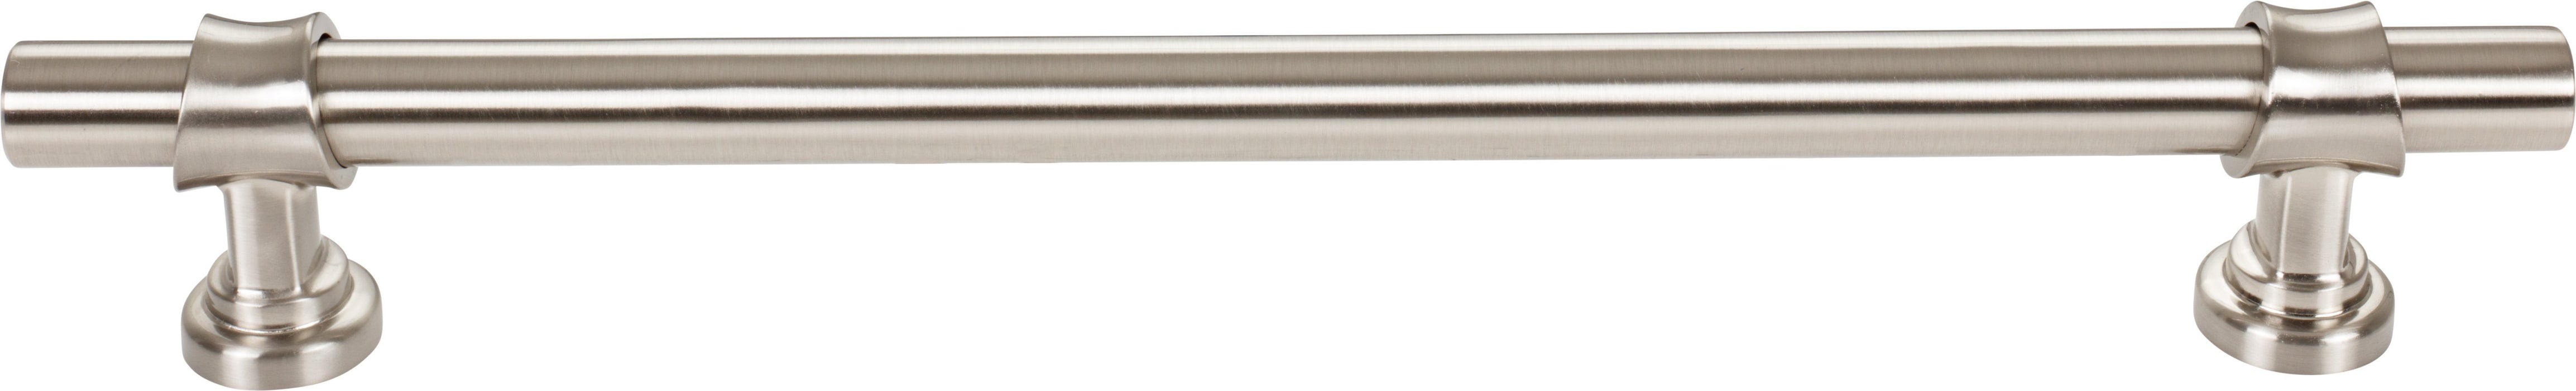 Top Knobs M2782 18in (457mm) Bit Appliance Pull Brushed Satin Nickel - KnobDepot